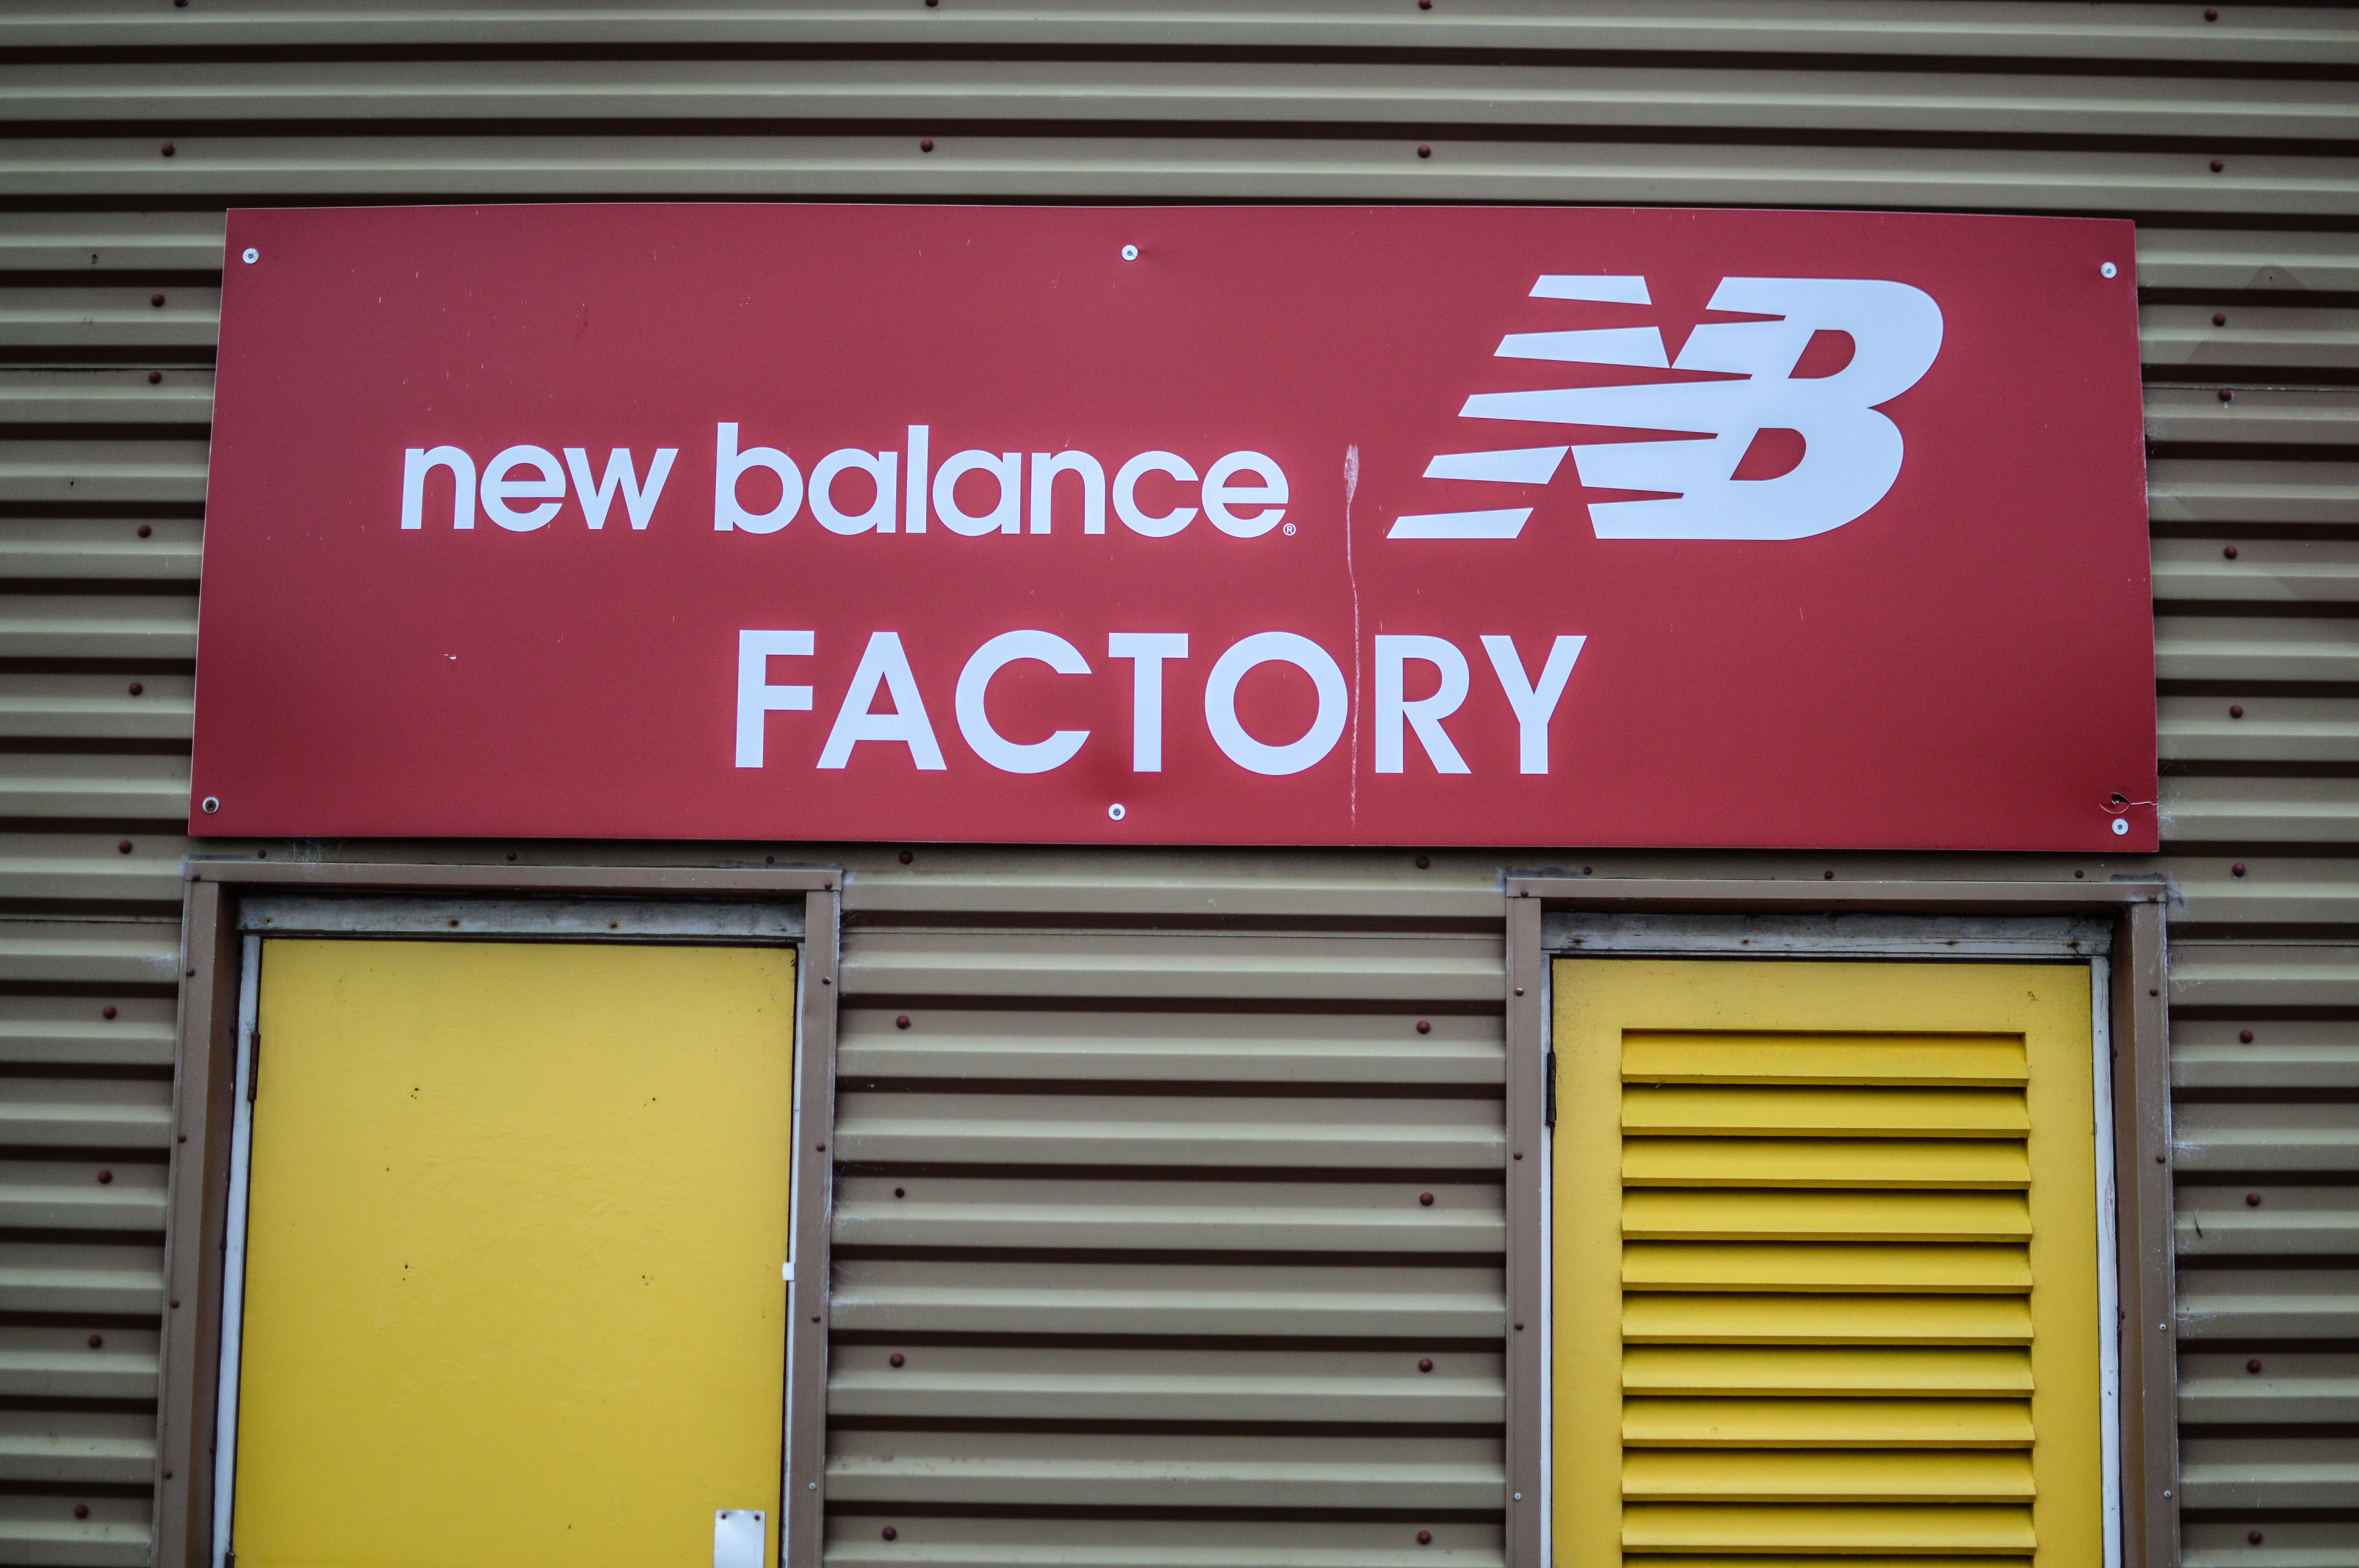 new balance factory cumbria flimby